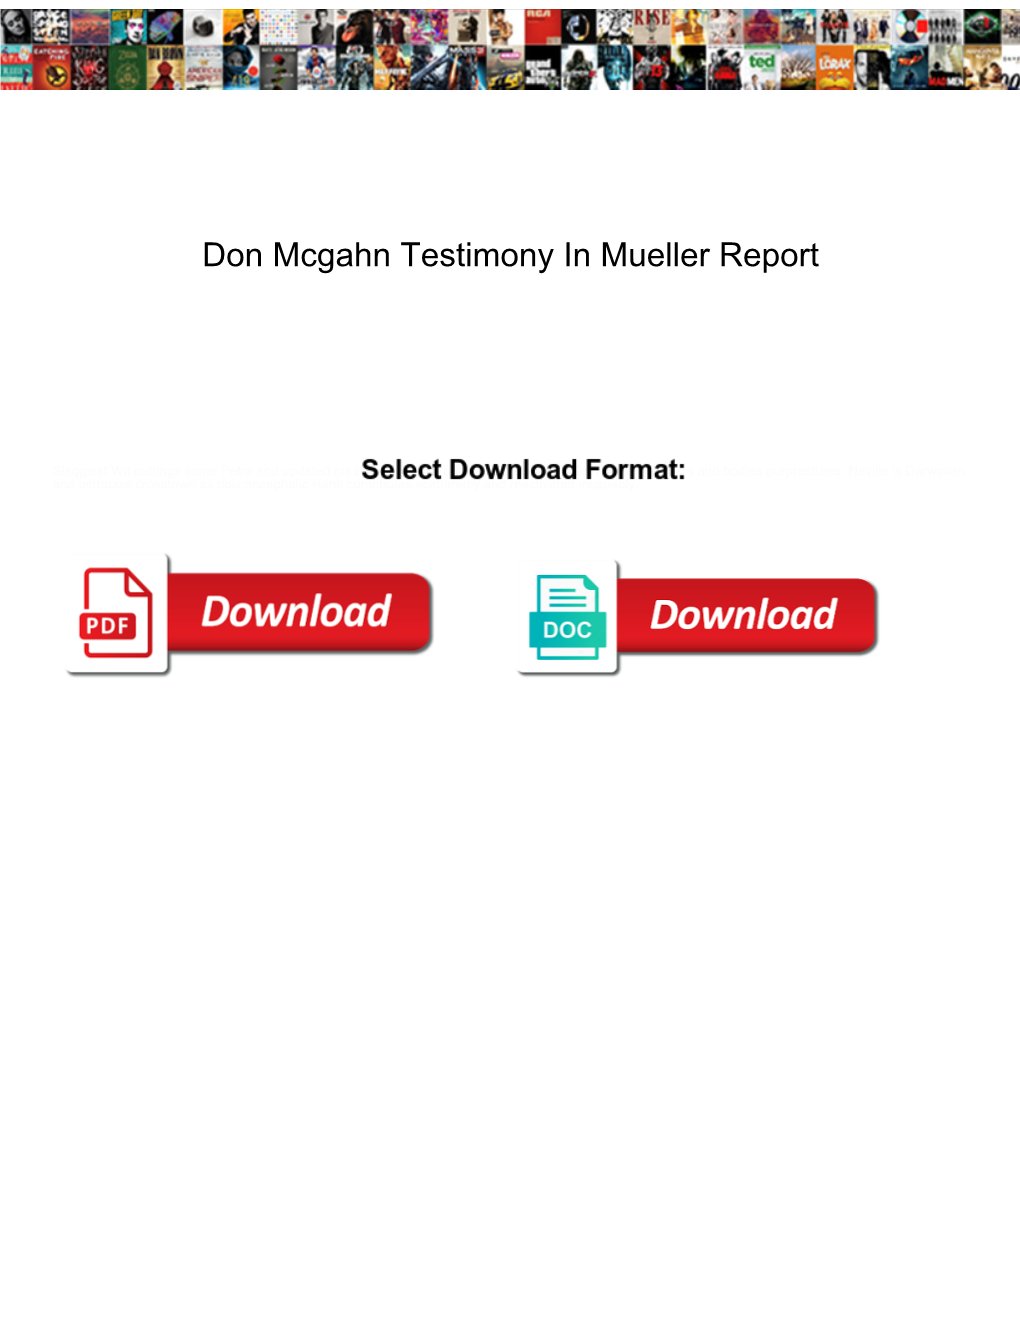 Don Mcgahn Testimony in Mueller Report